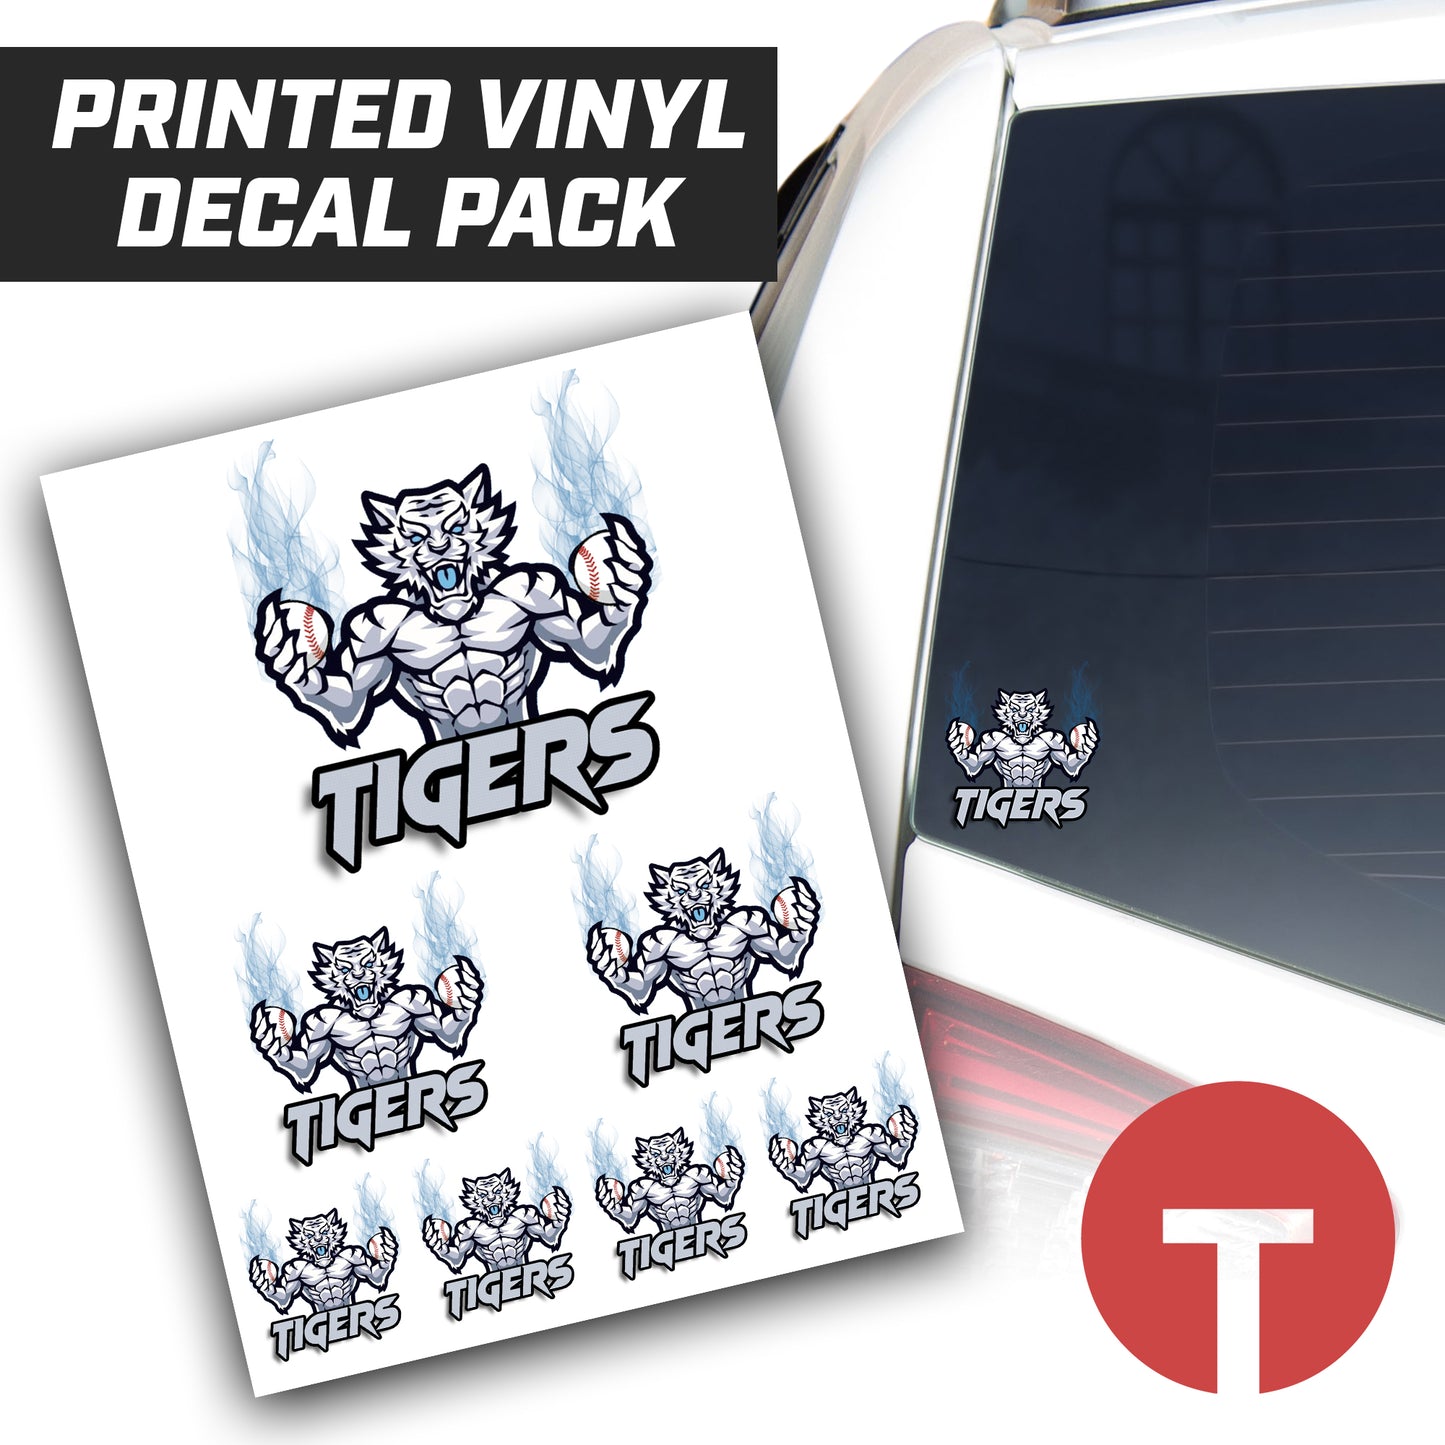 Tigers J Leon - Logo Vinyl Decal Pack